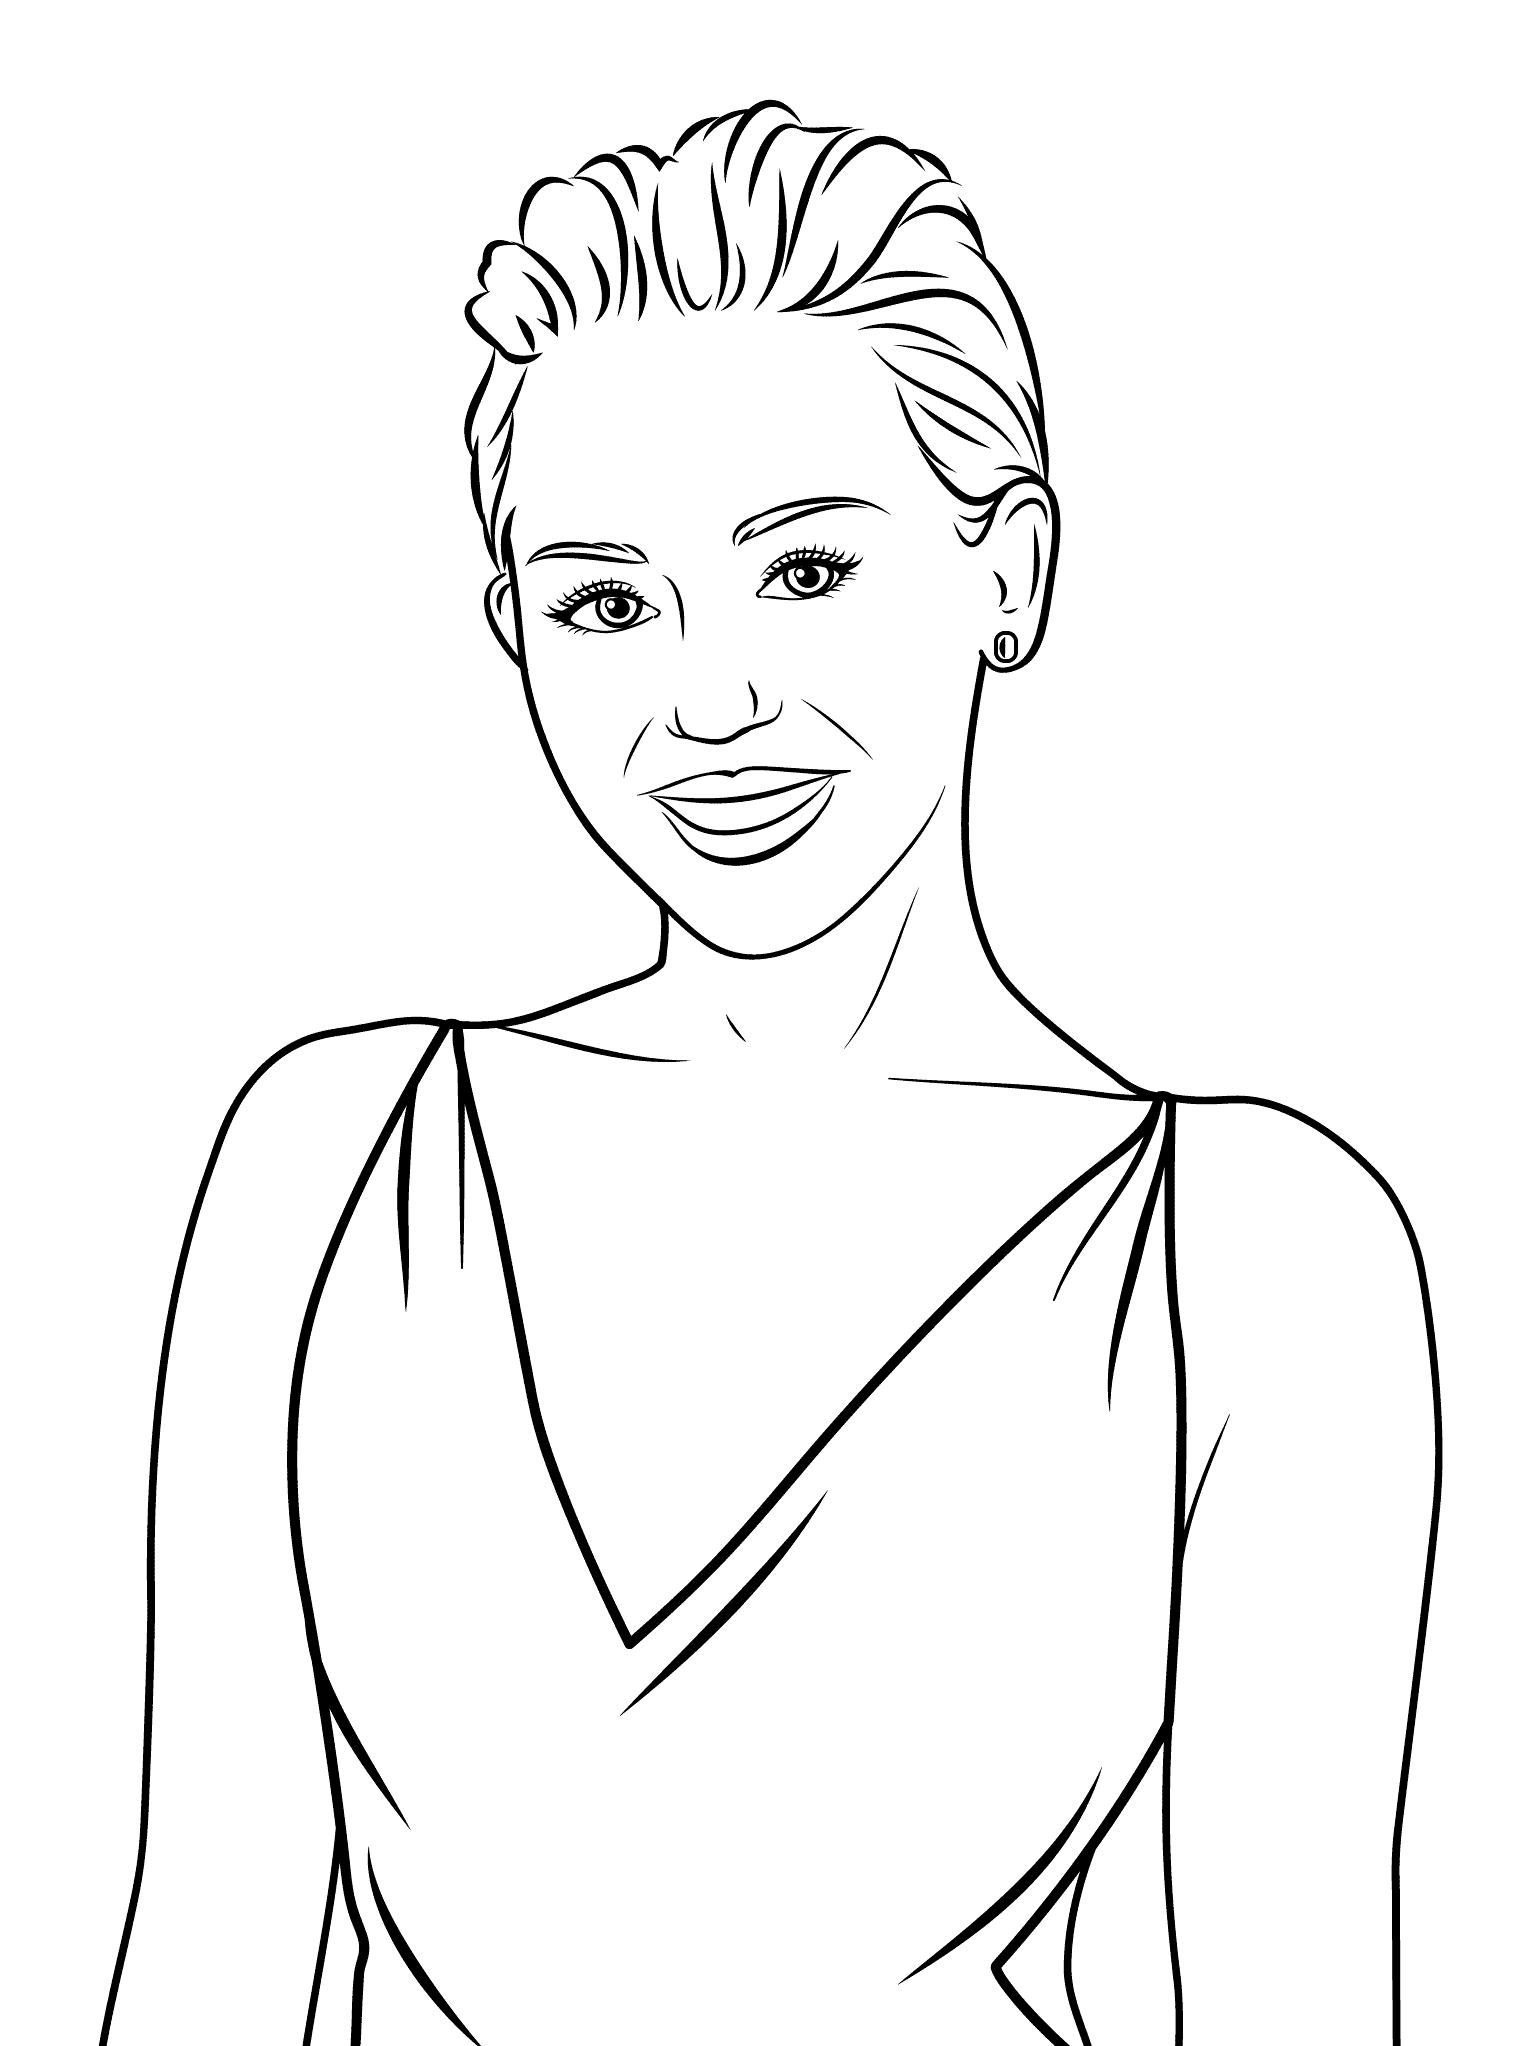 Miley Cyrus Celebrity Coloring Page